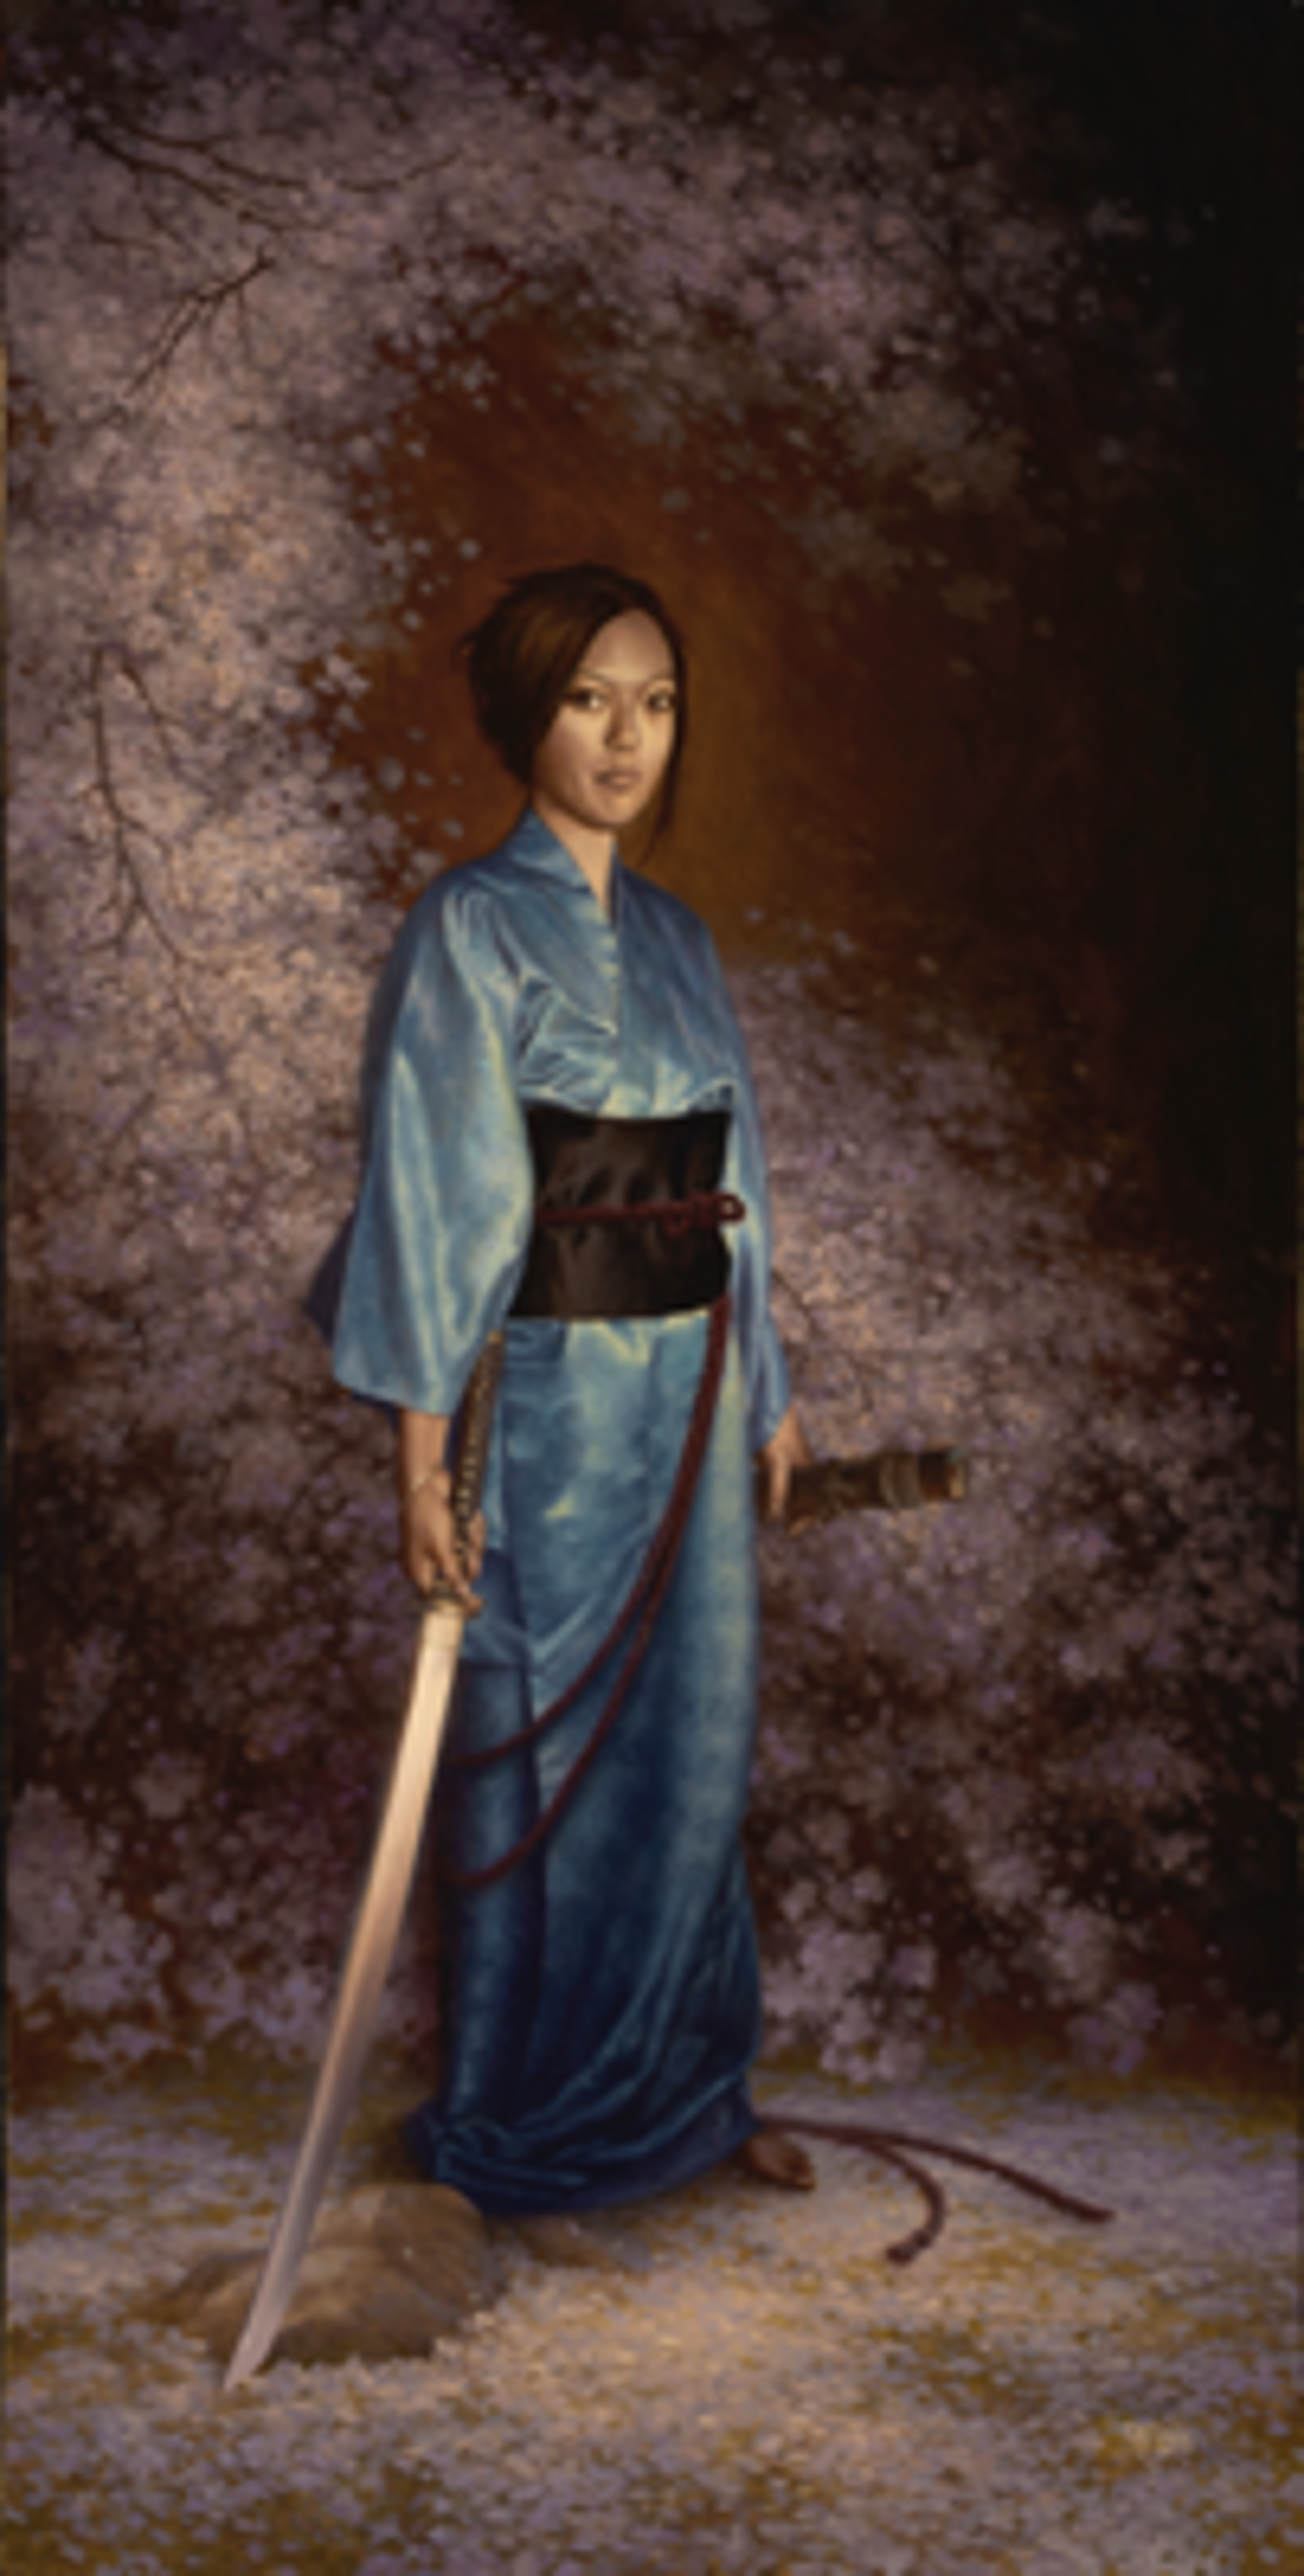 The Blue Kimono by Christophe Vacher